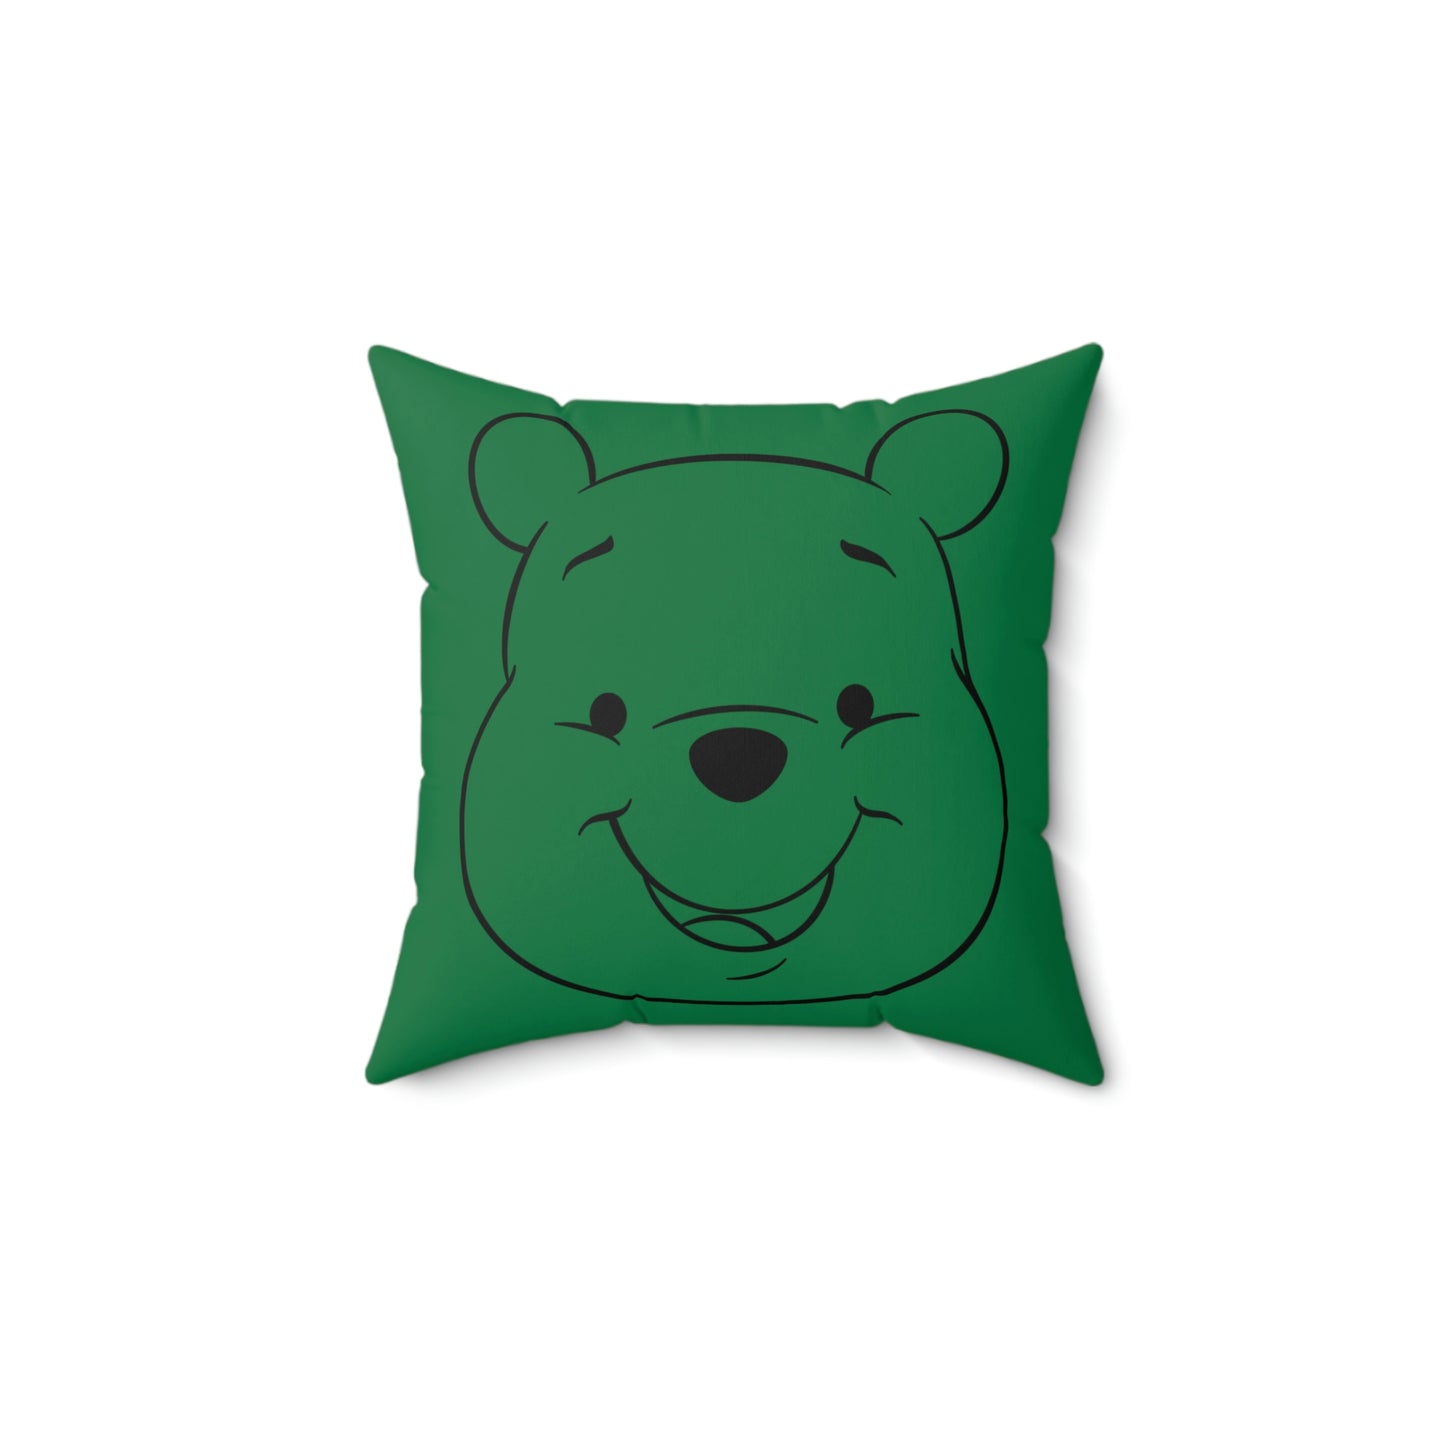 Spun Polyester Square Pillow Case “Pooh Line on Dark Green”